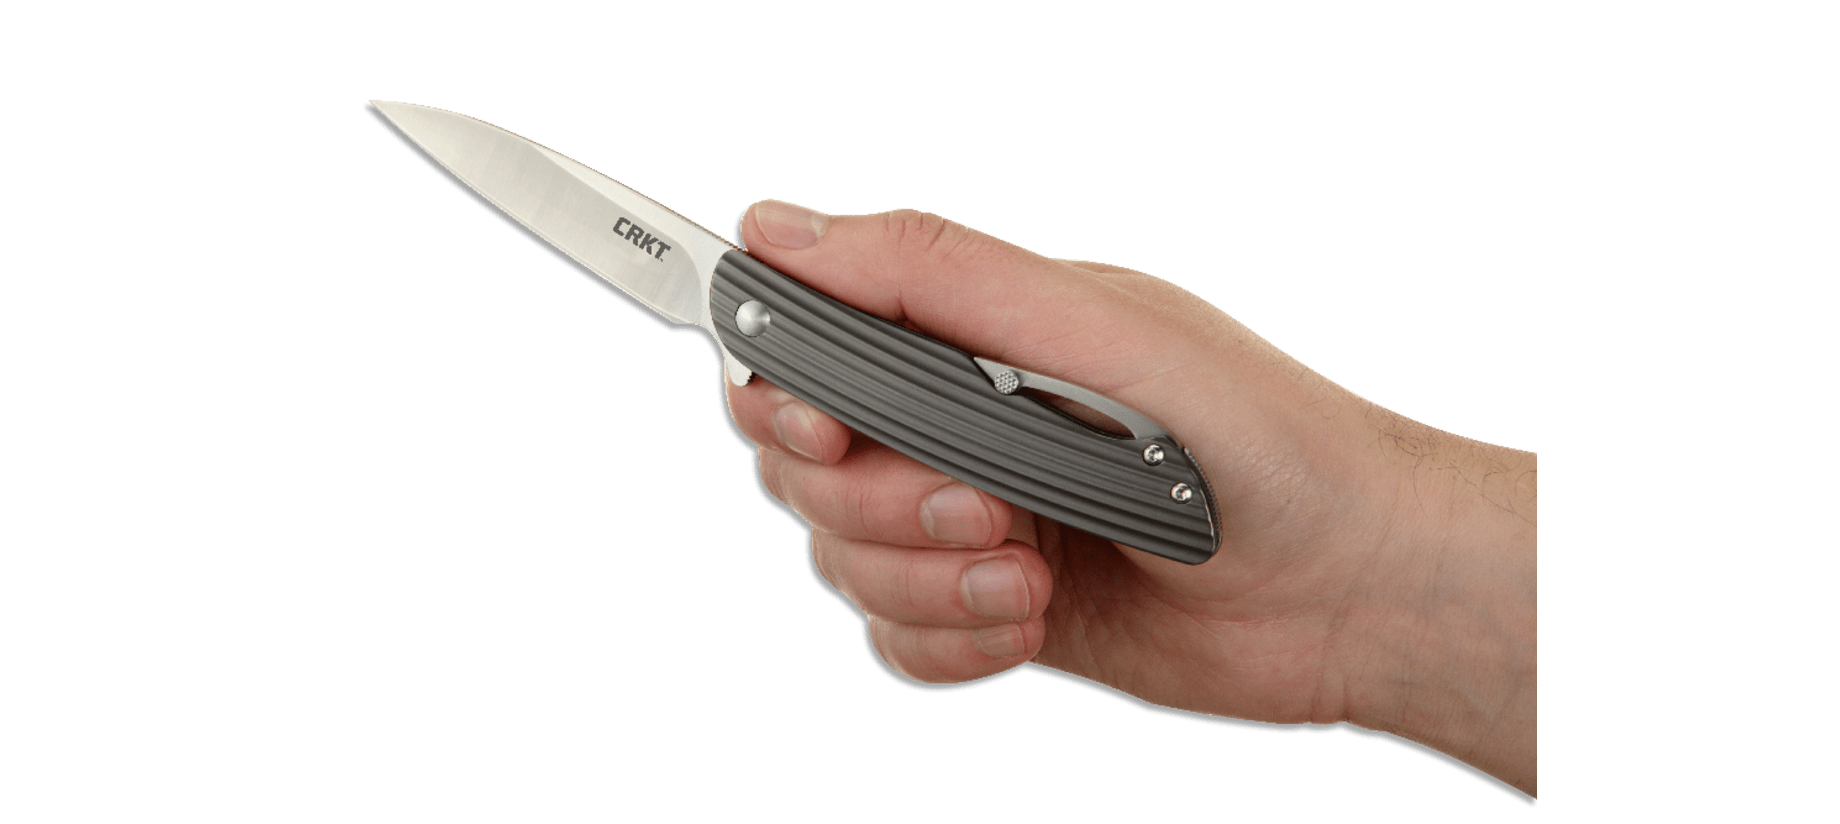 Складной нож CRKT. Ножи CRKT Pocket Knife. CRKT Foldable Knife. CRKT CR/5406k нож. Sandvik 12c27